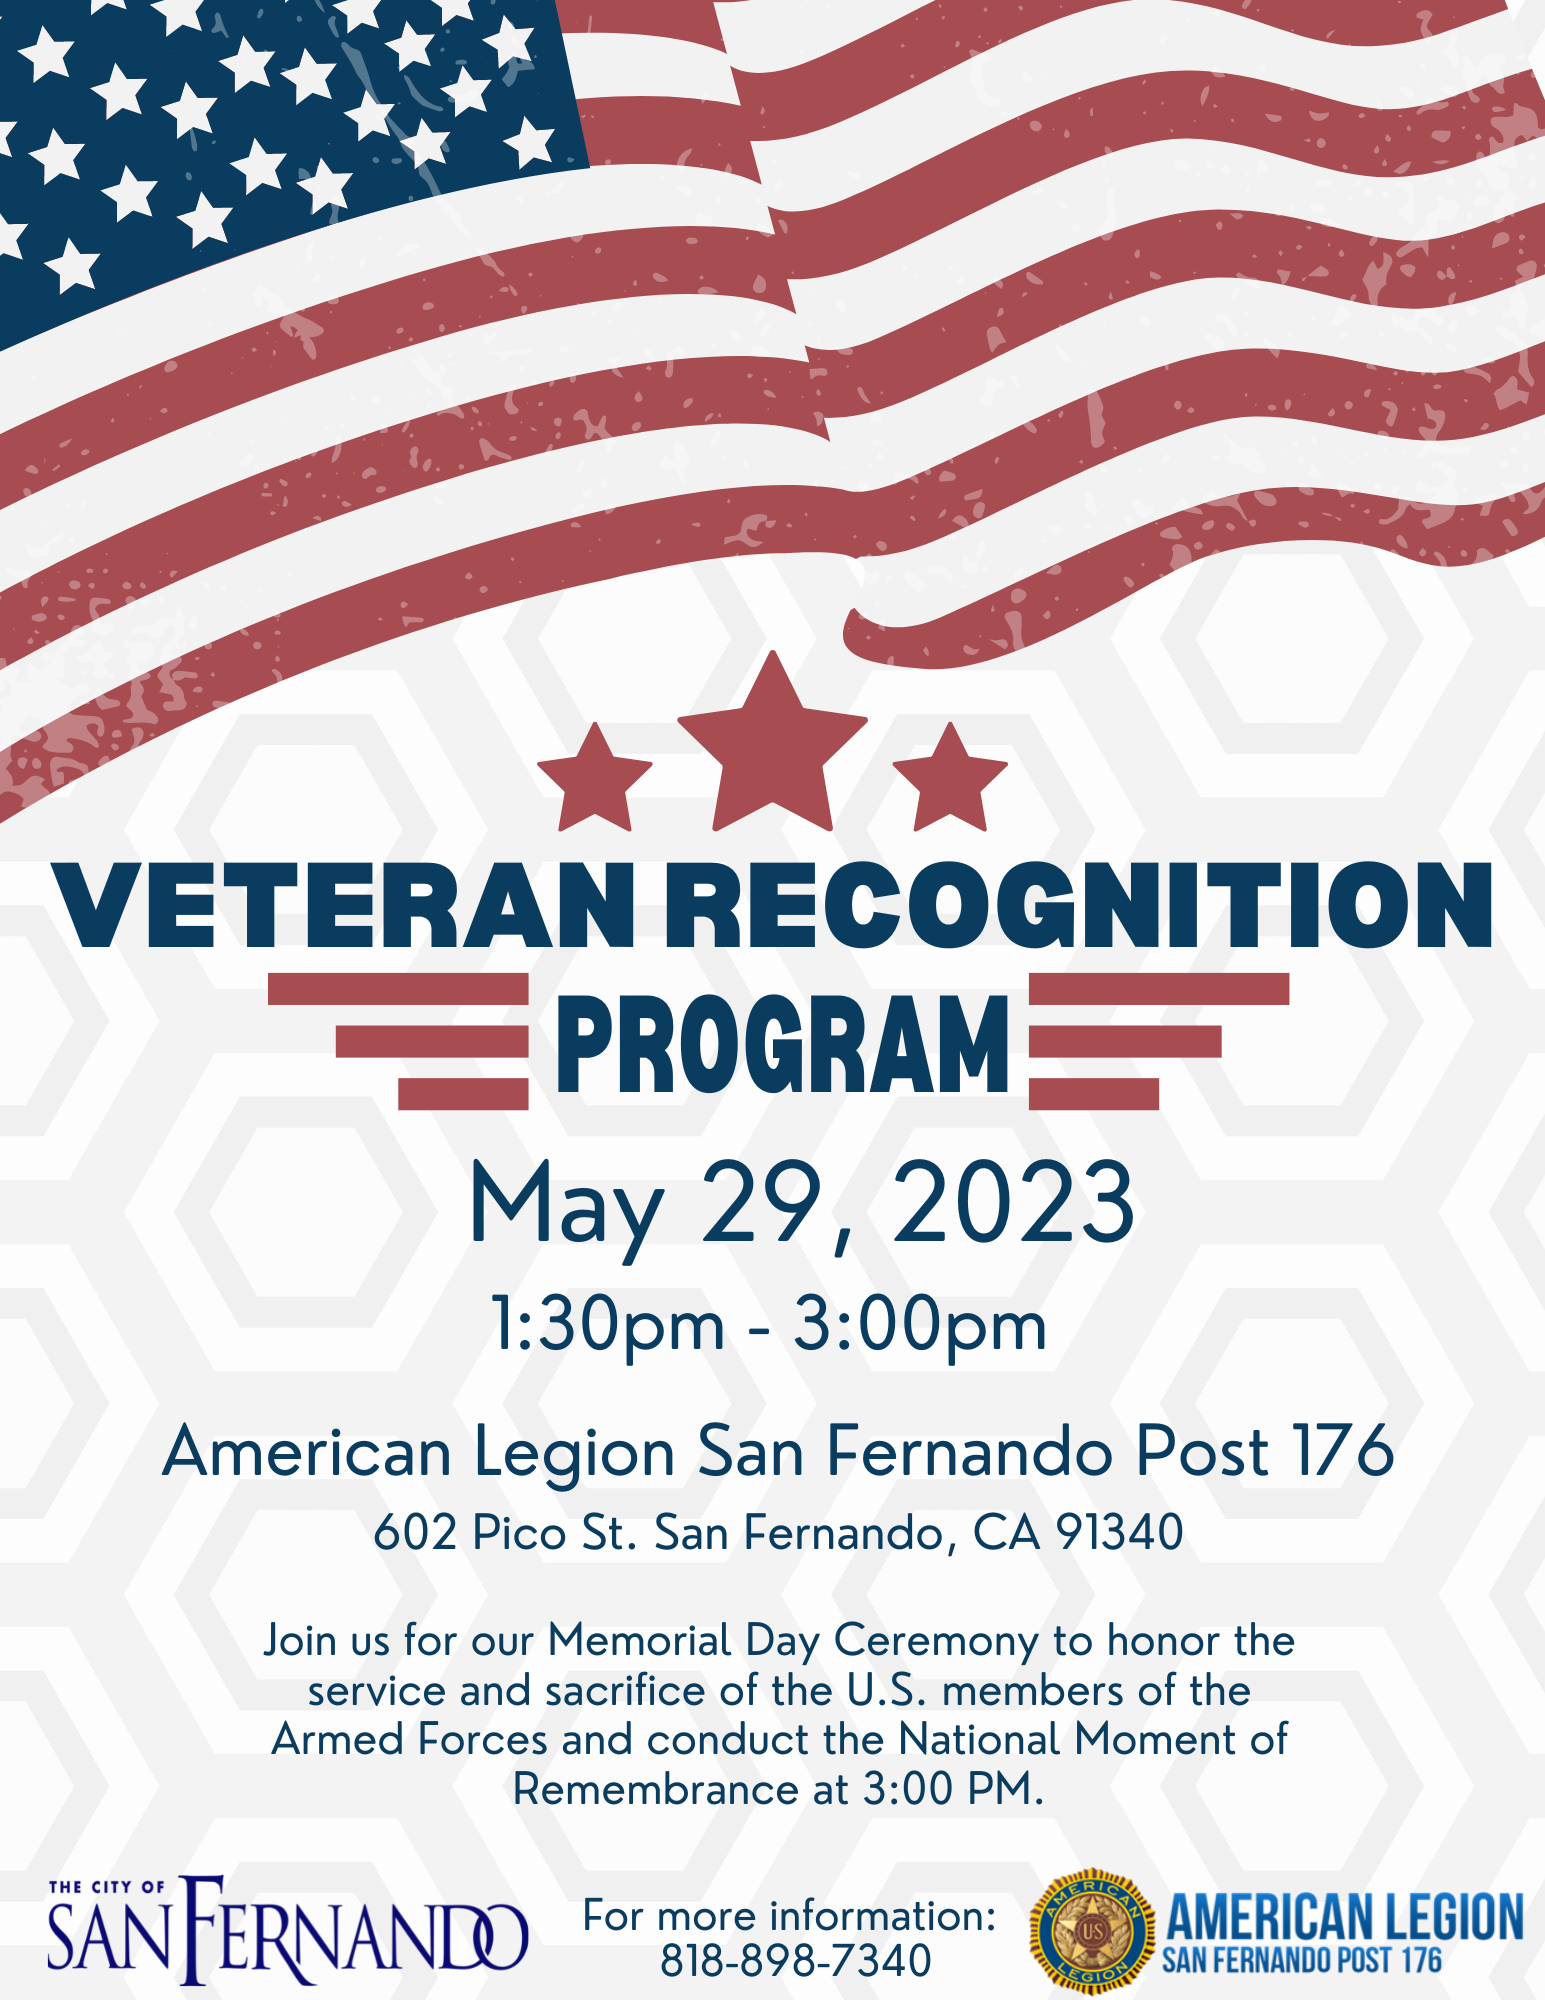 Veterans Recognition Program Event (5-29-23) Flyer